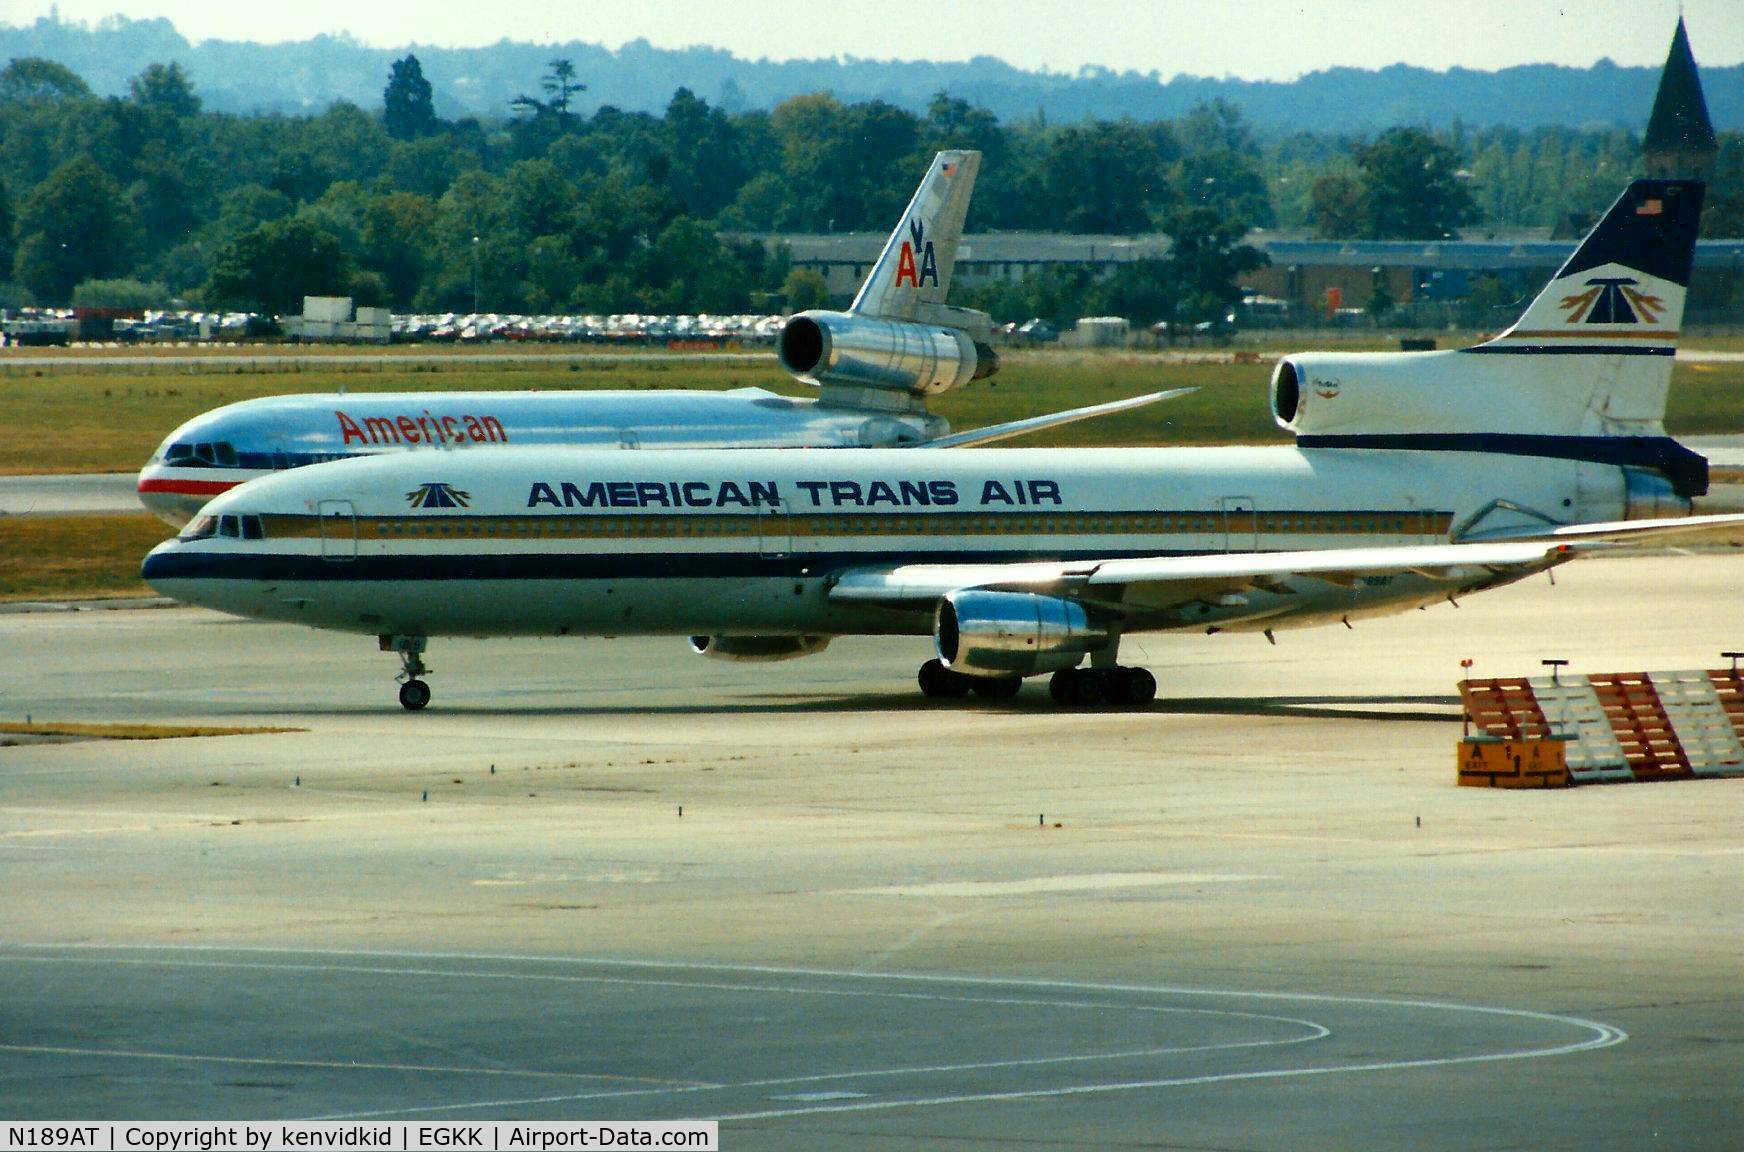 N189AT, 1974 Lockheed L-1011-385-1 TriStar 1 C/N 193C-1081, At Gatwick circa 1989.